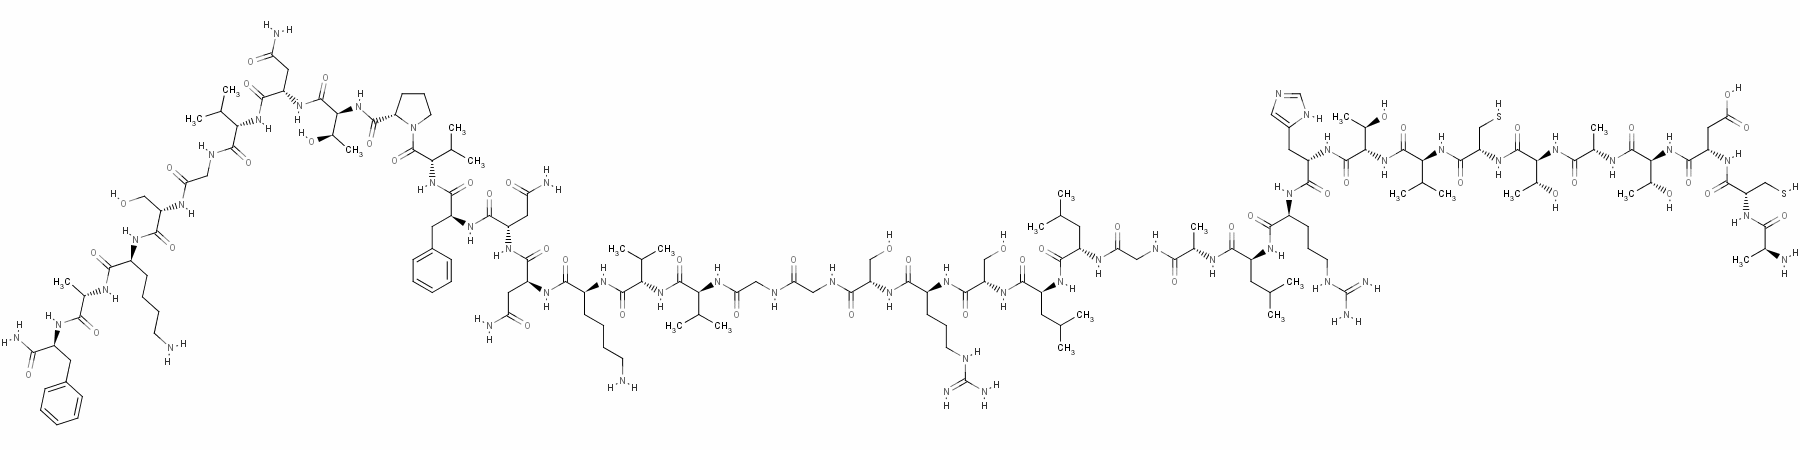 Alpha-CGRP (human) trifluoroacetate salt H-Ala-Cys-Asp-Thr-Ala-Thr-Cys-Val-Thr-His-Arg-Leu-Ala-Gly-Leu-Leu-Ser-Arg-Ser-Gly-Gly-Val-Val-Lys-Asn-Asn-Phe-Val-Pro-Thr-Asn-Val-Gly-Ser-Lys-Ala-Phe-NH2 trifluoroacetate salt (Disulfide bond)